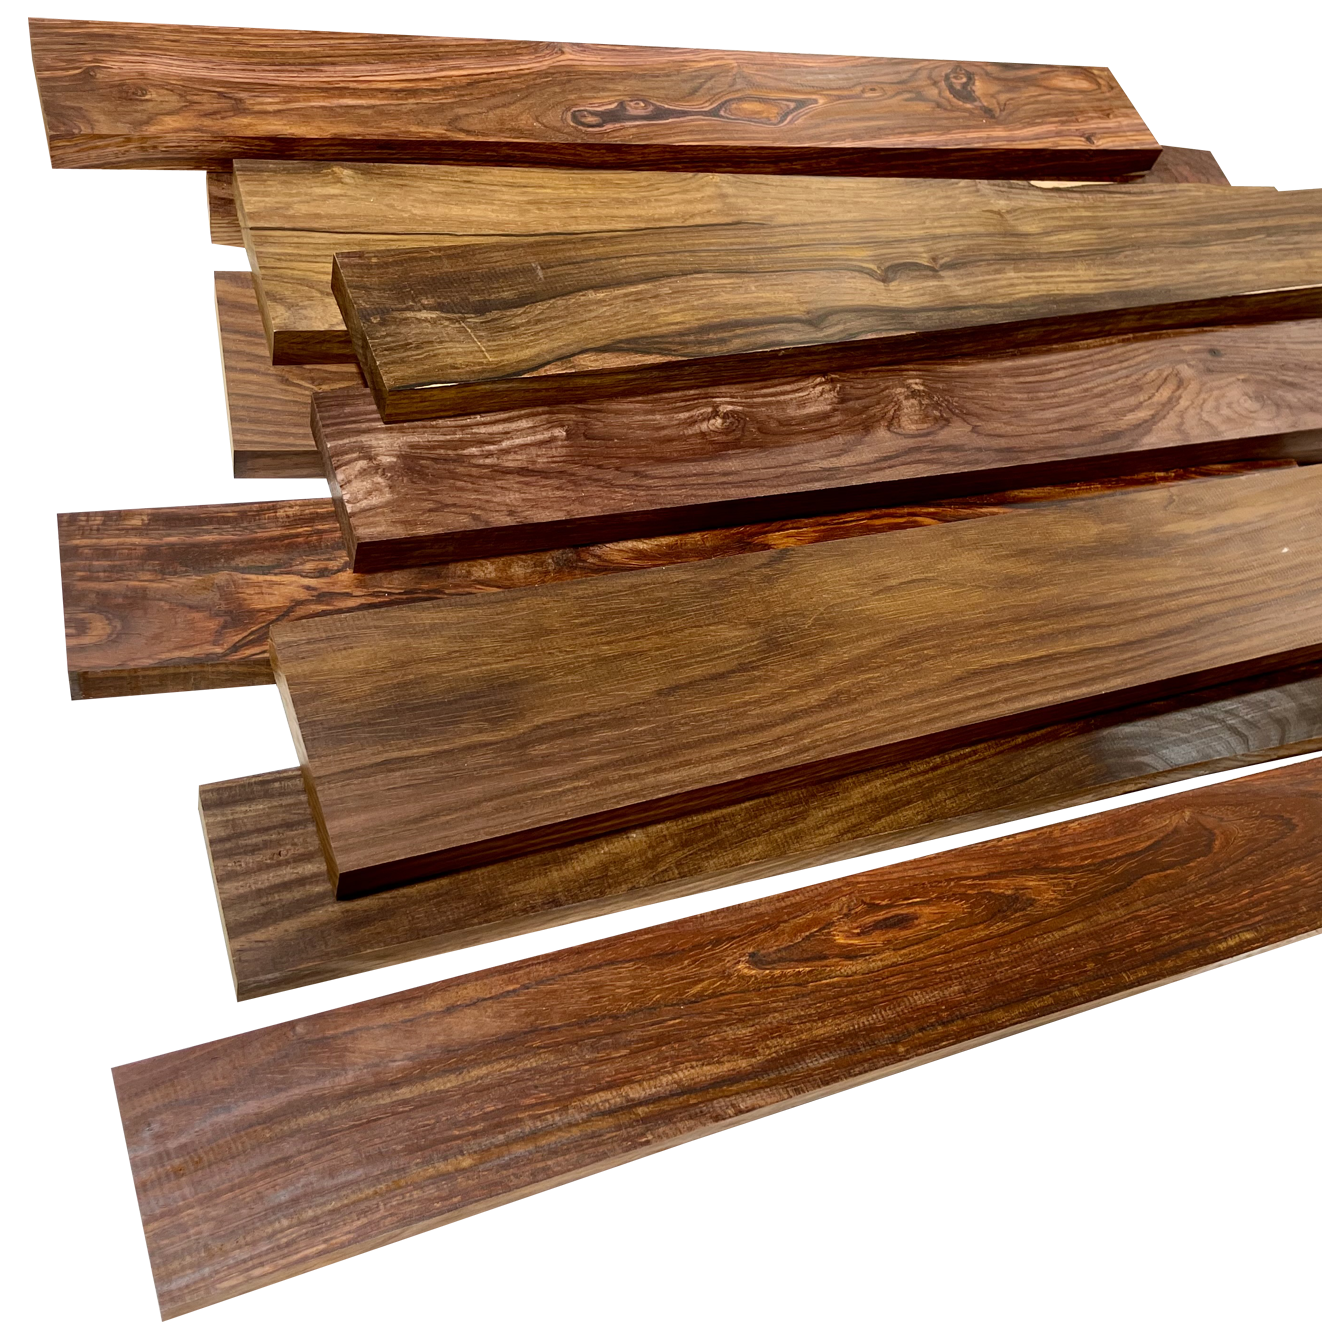 Cocobolo - Dimensional Lumber